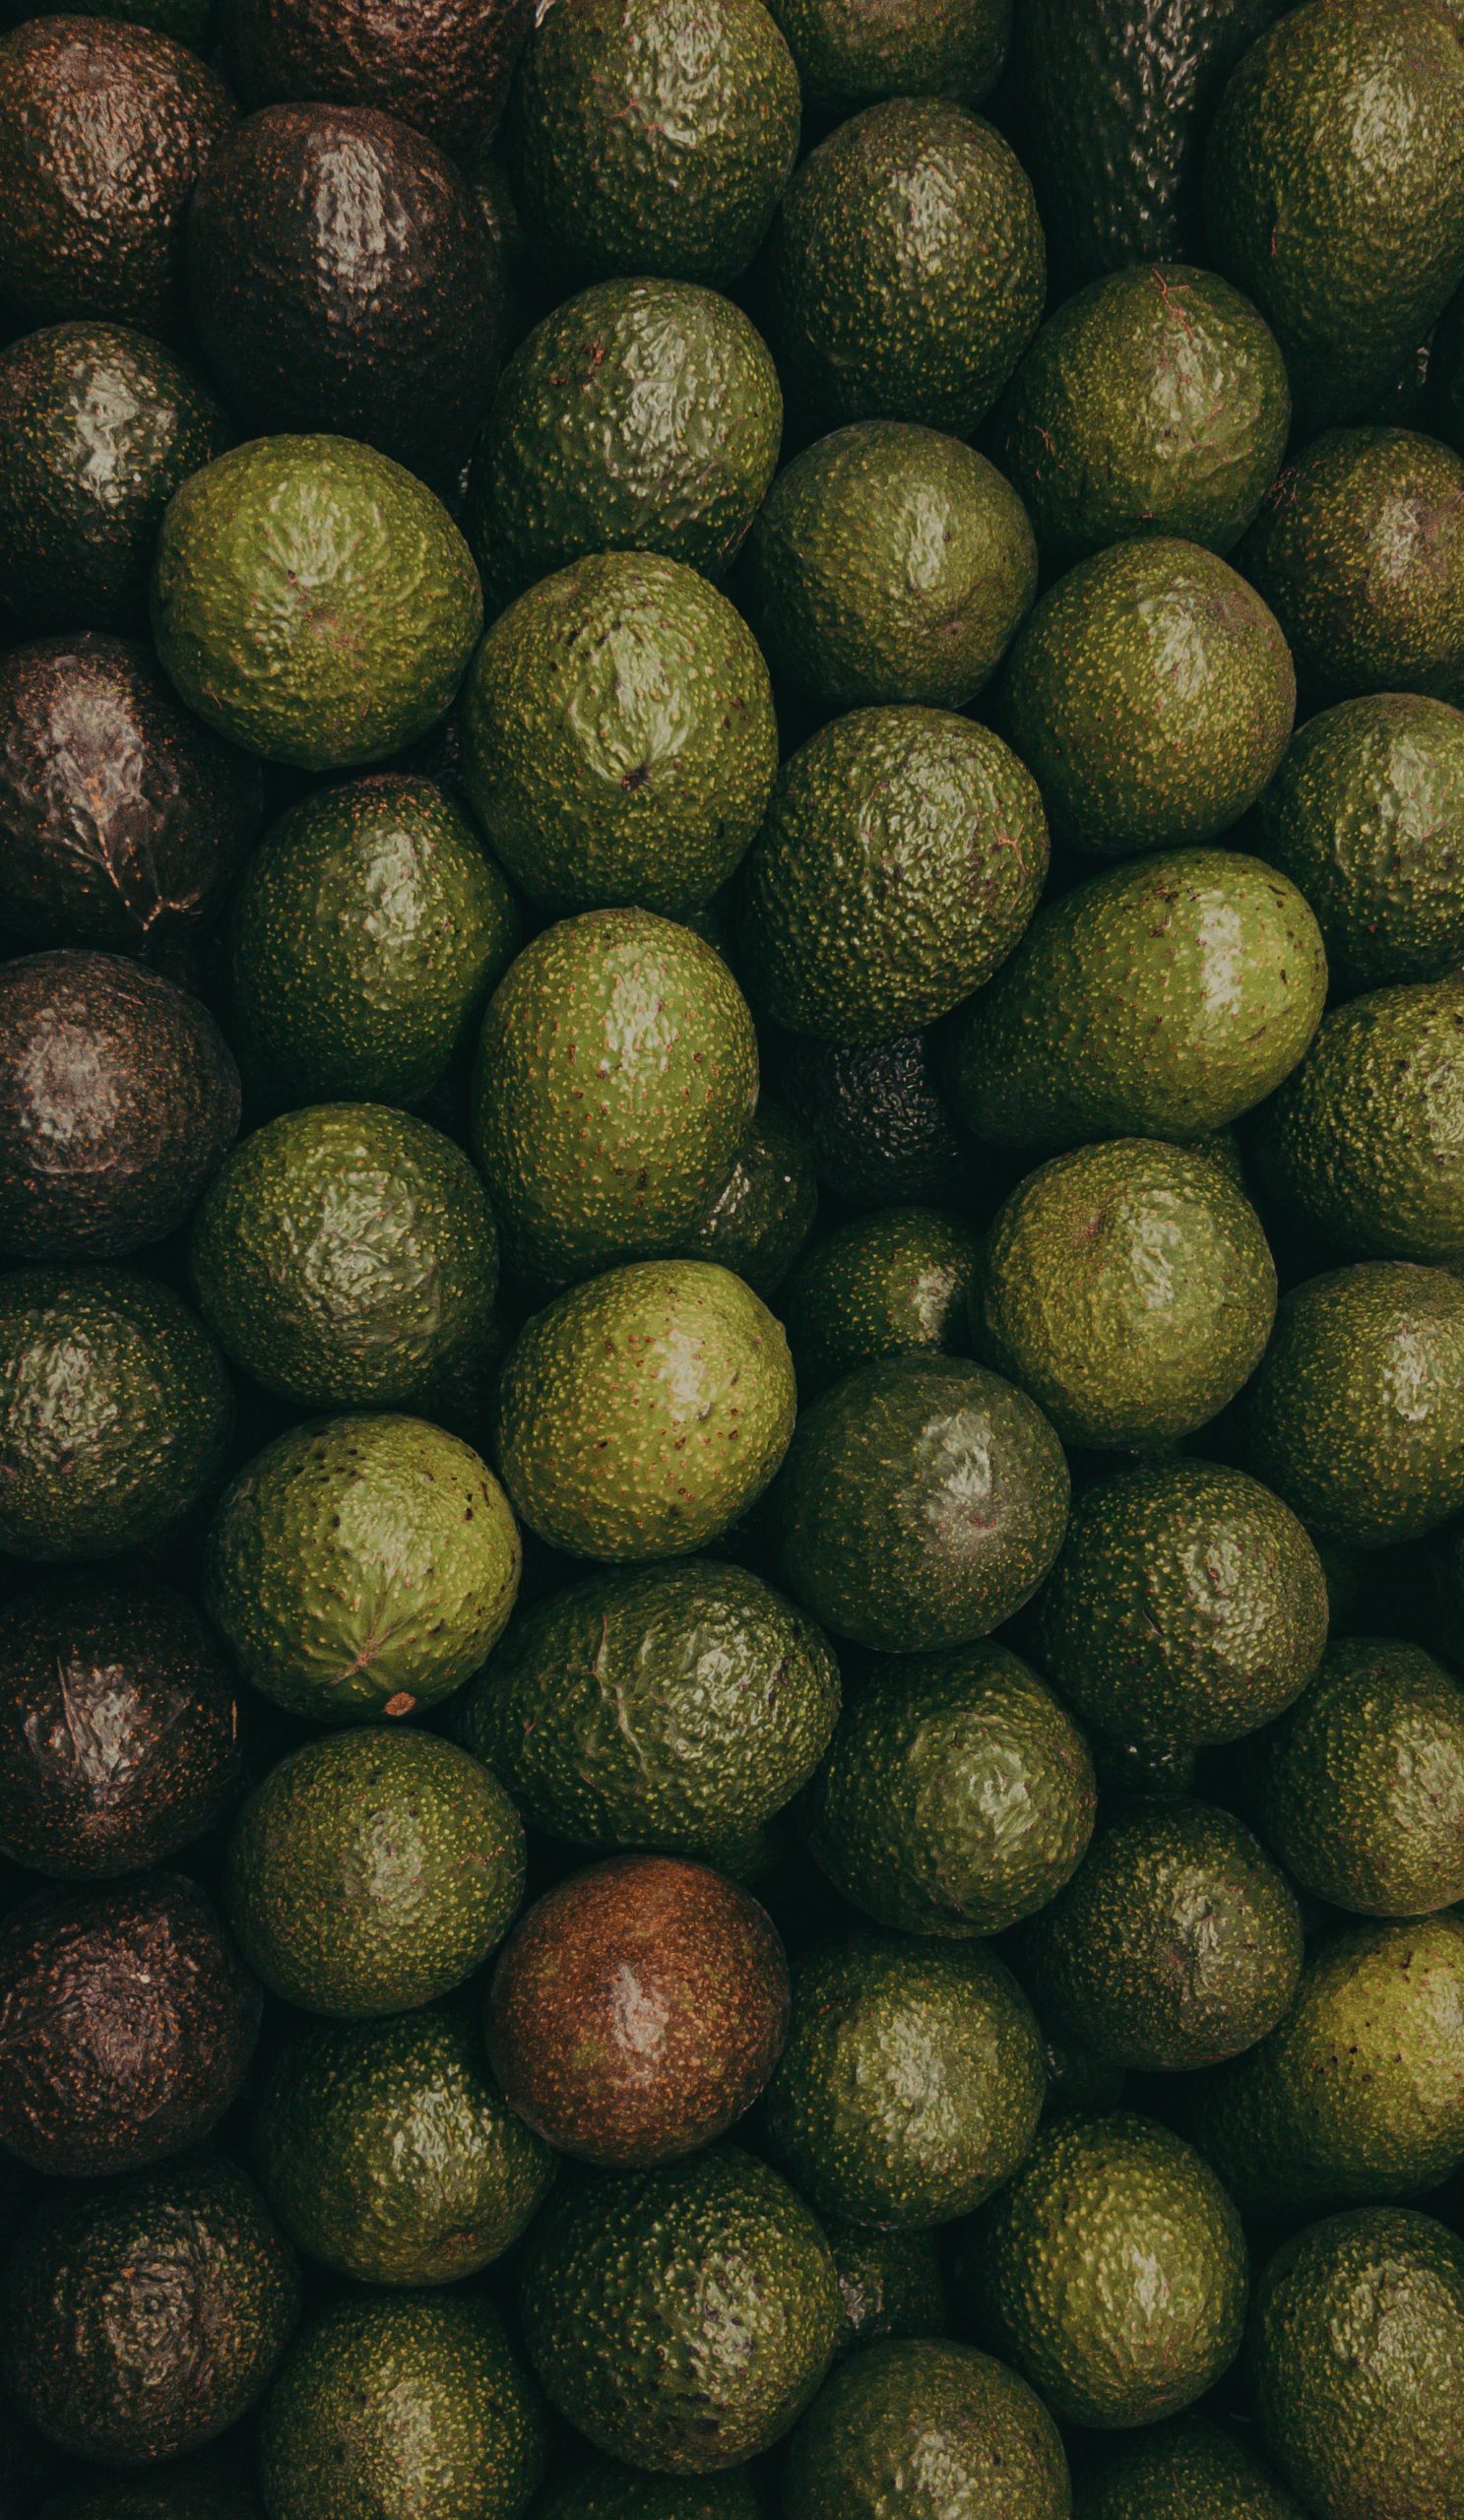 Avocadoes contain vitamin B